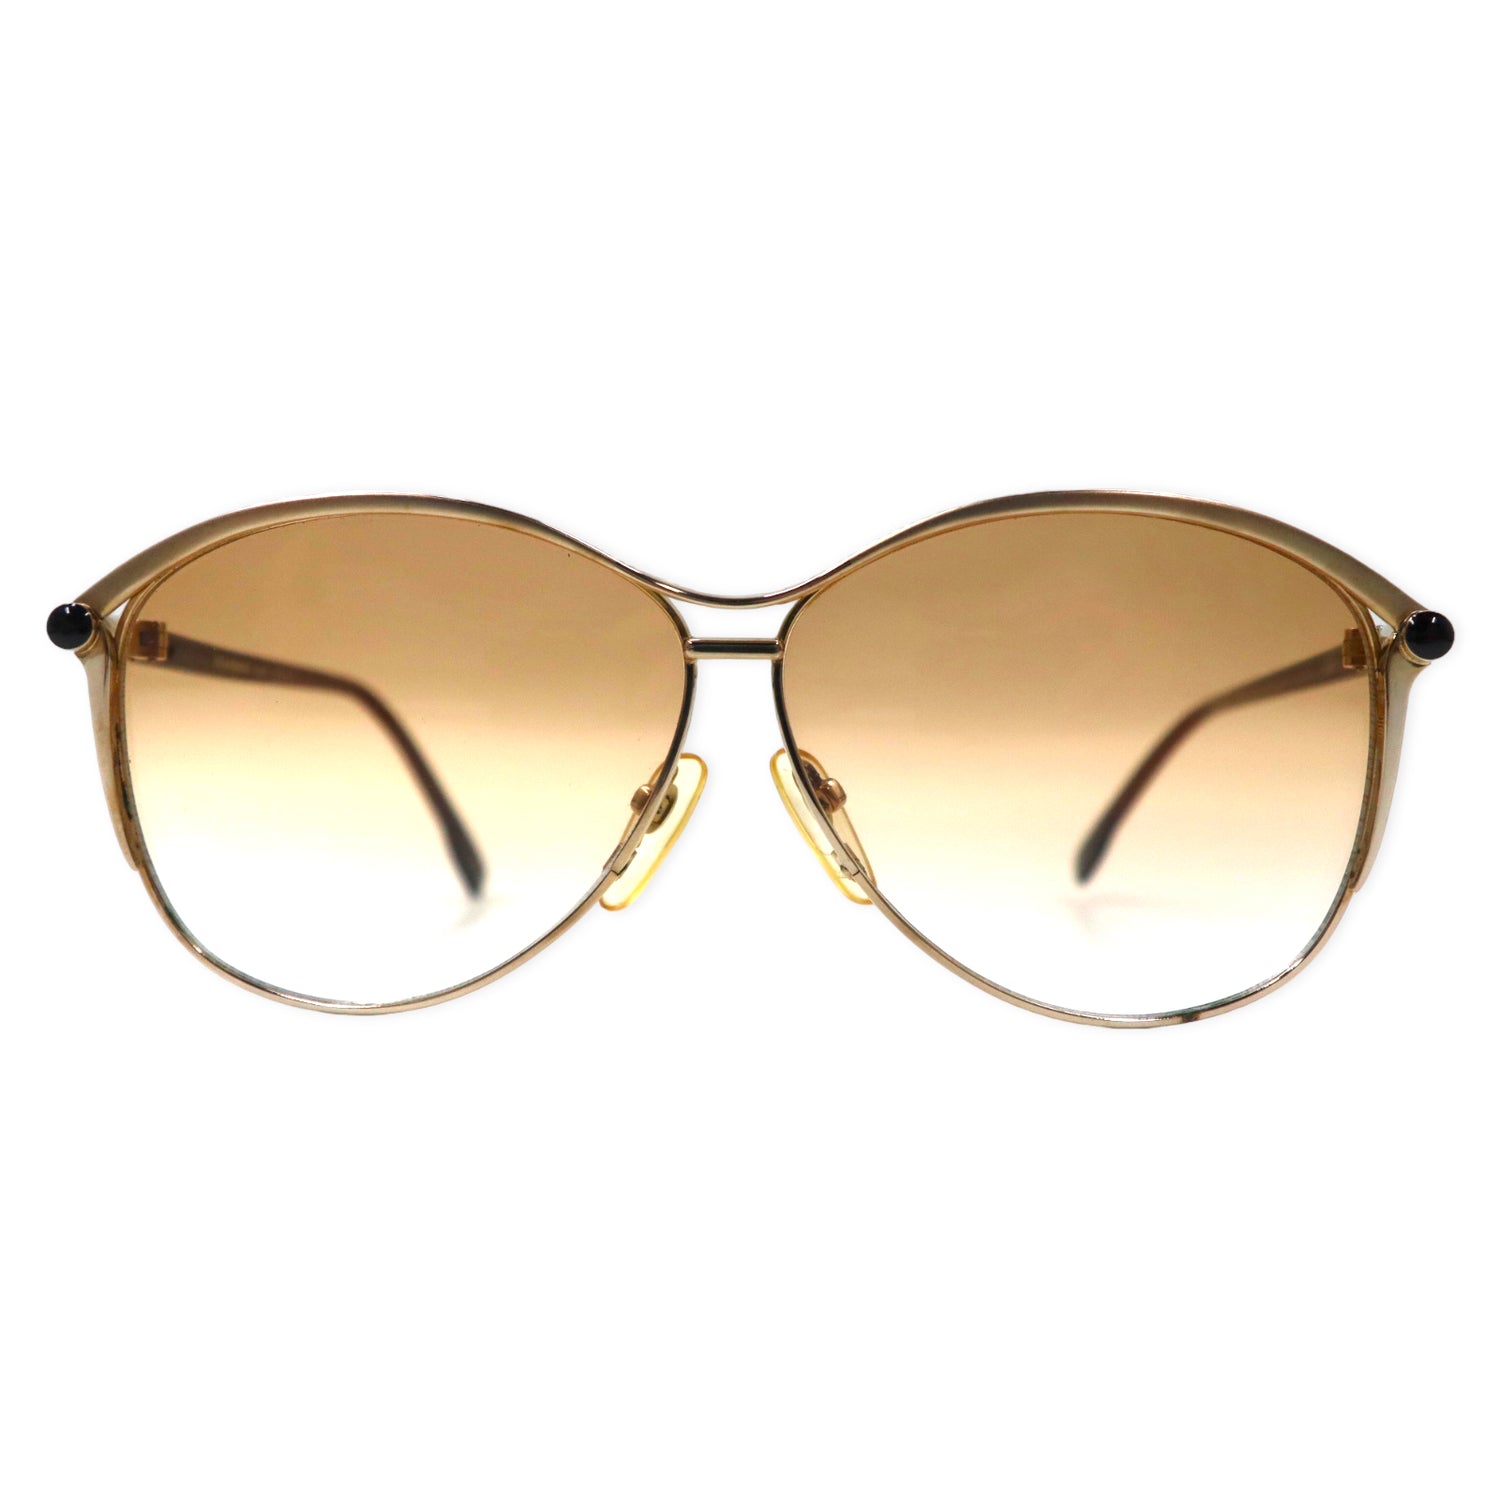 Yves Saint Laurent Sunglasses Tear Drop Metal Frame Gold YSL 31 